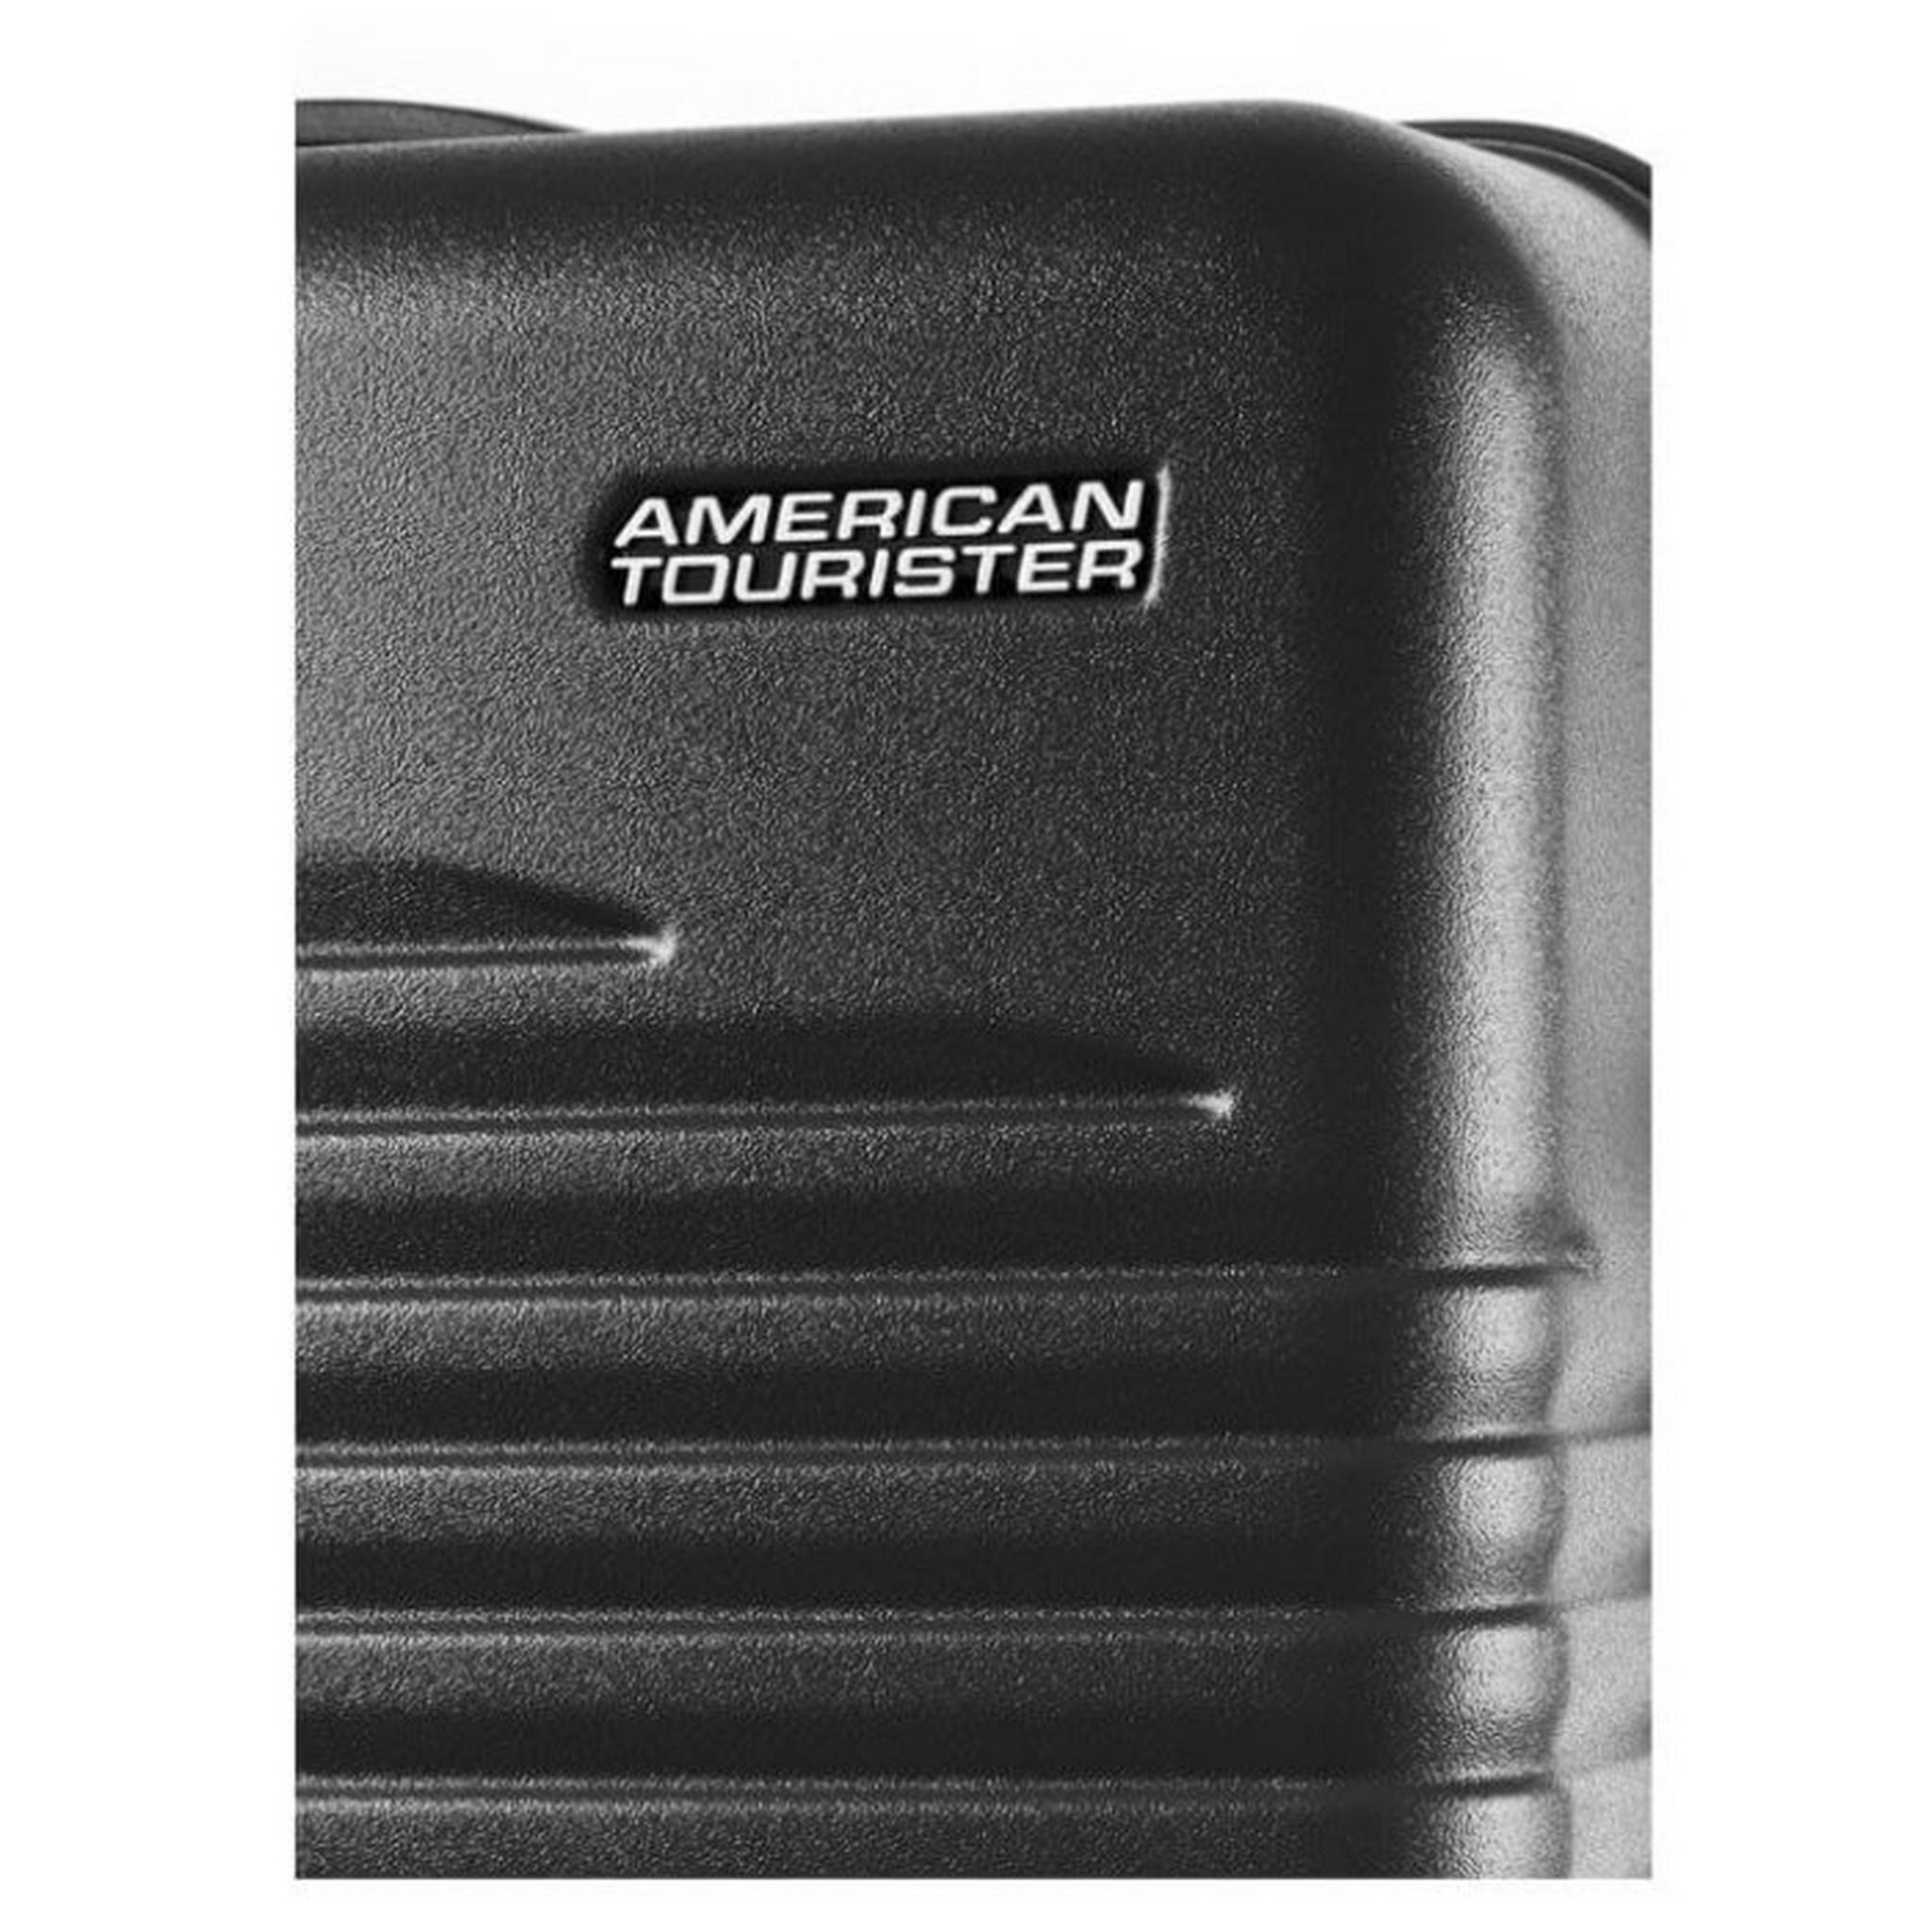 American Tourister 55cm Spinner Sky Park Hard Luggage - Black